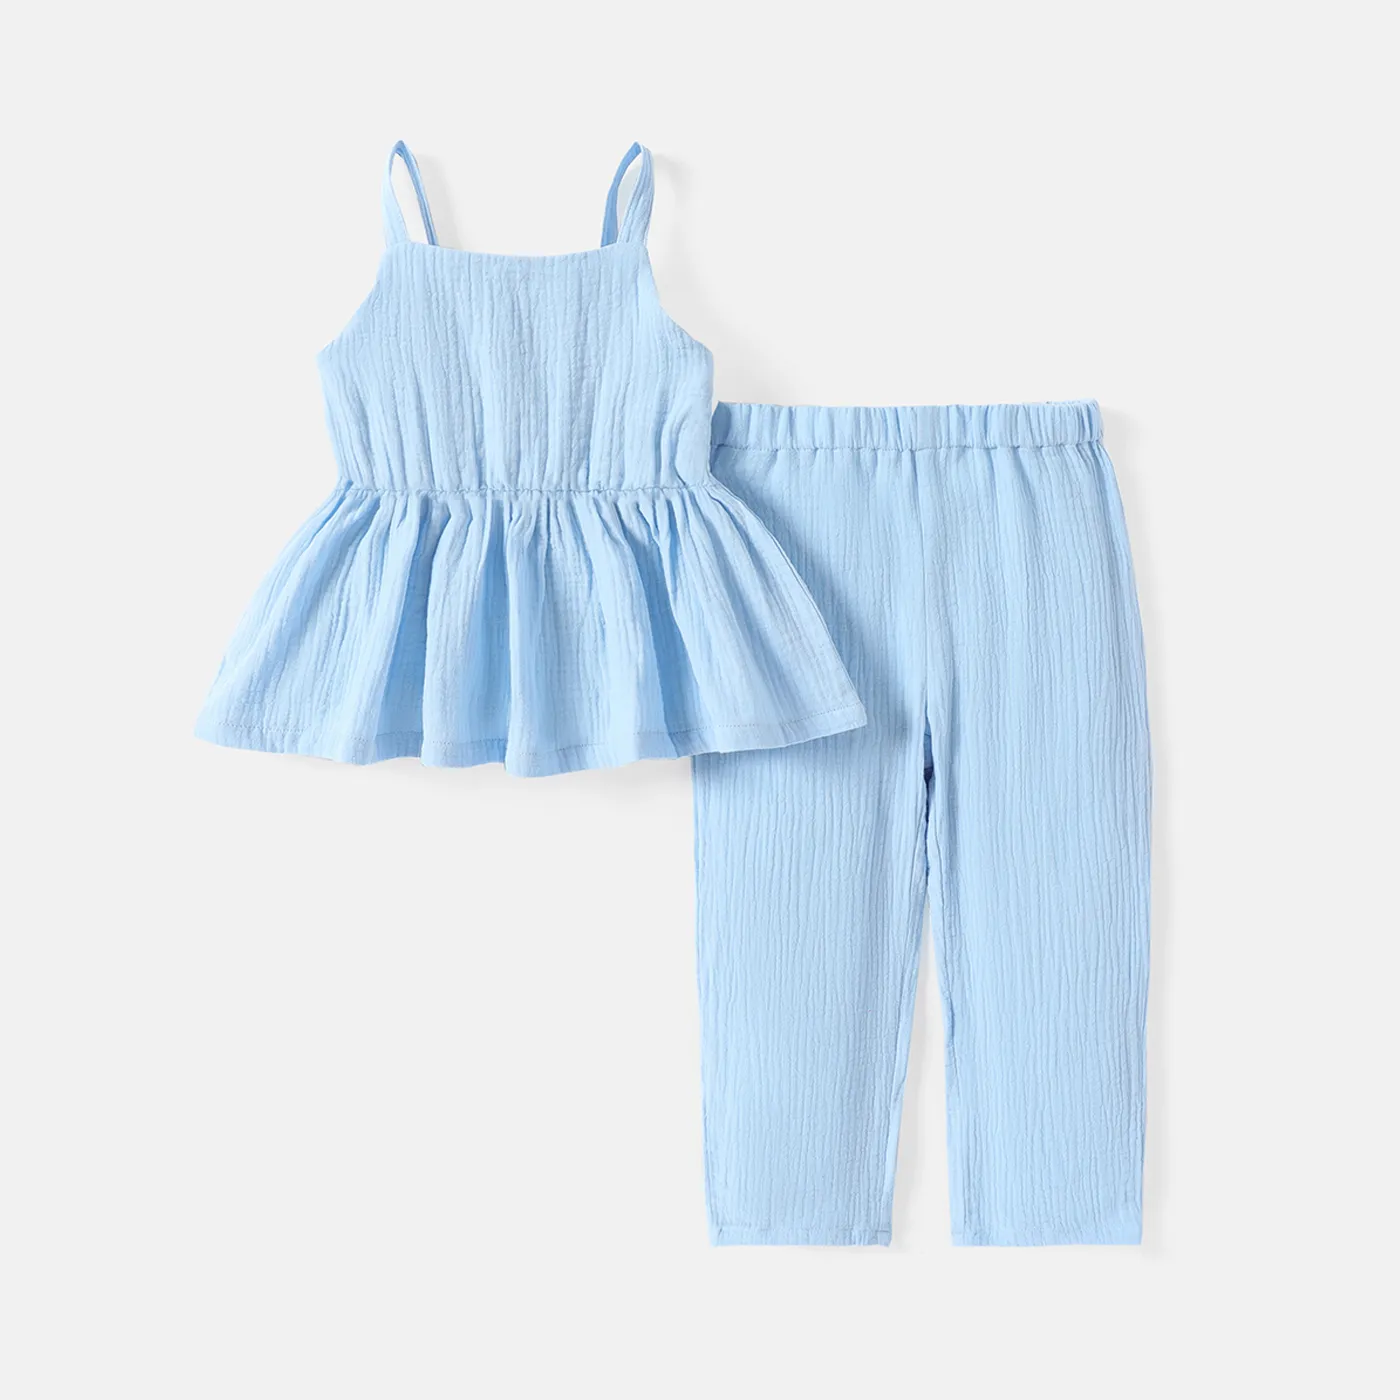 2pcs Toddler Girl 100% Cotton Solid Color Peplum Tank Top and Pants Set